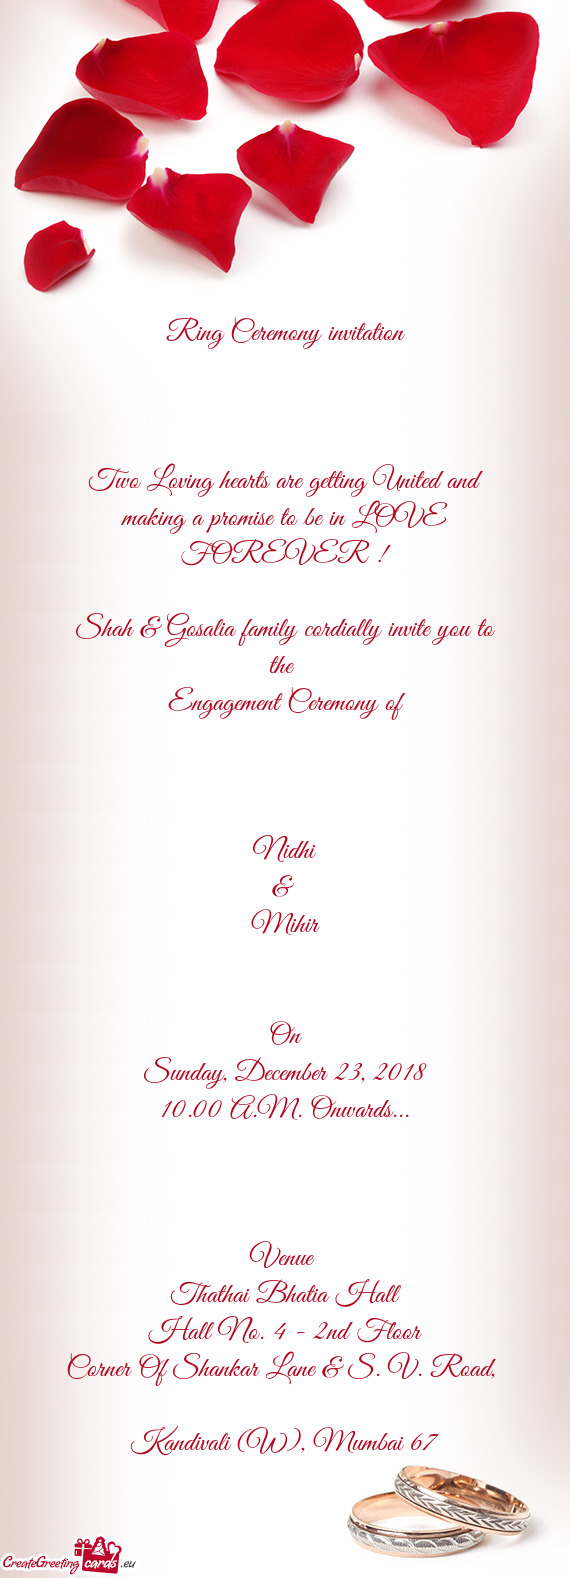 Shah & Gosalia family cordially invite you to the